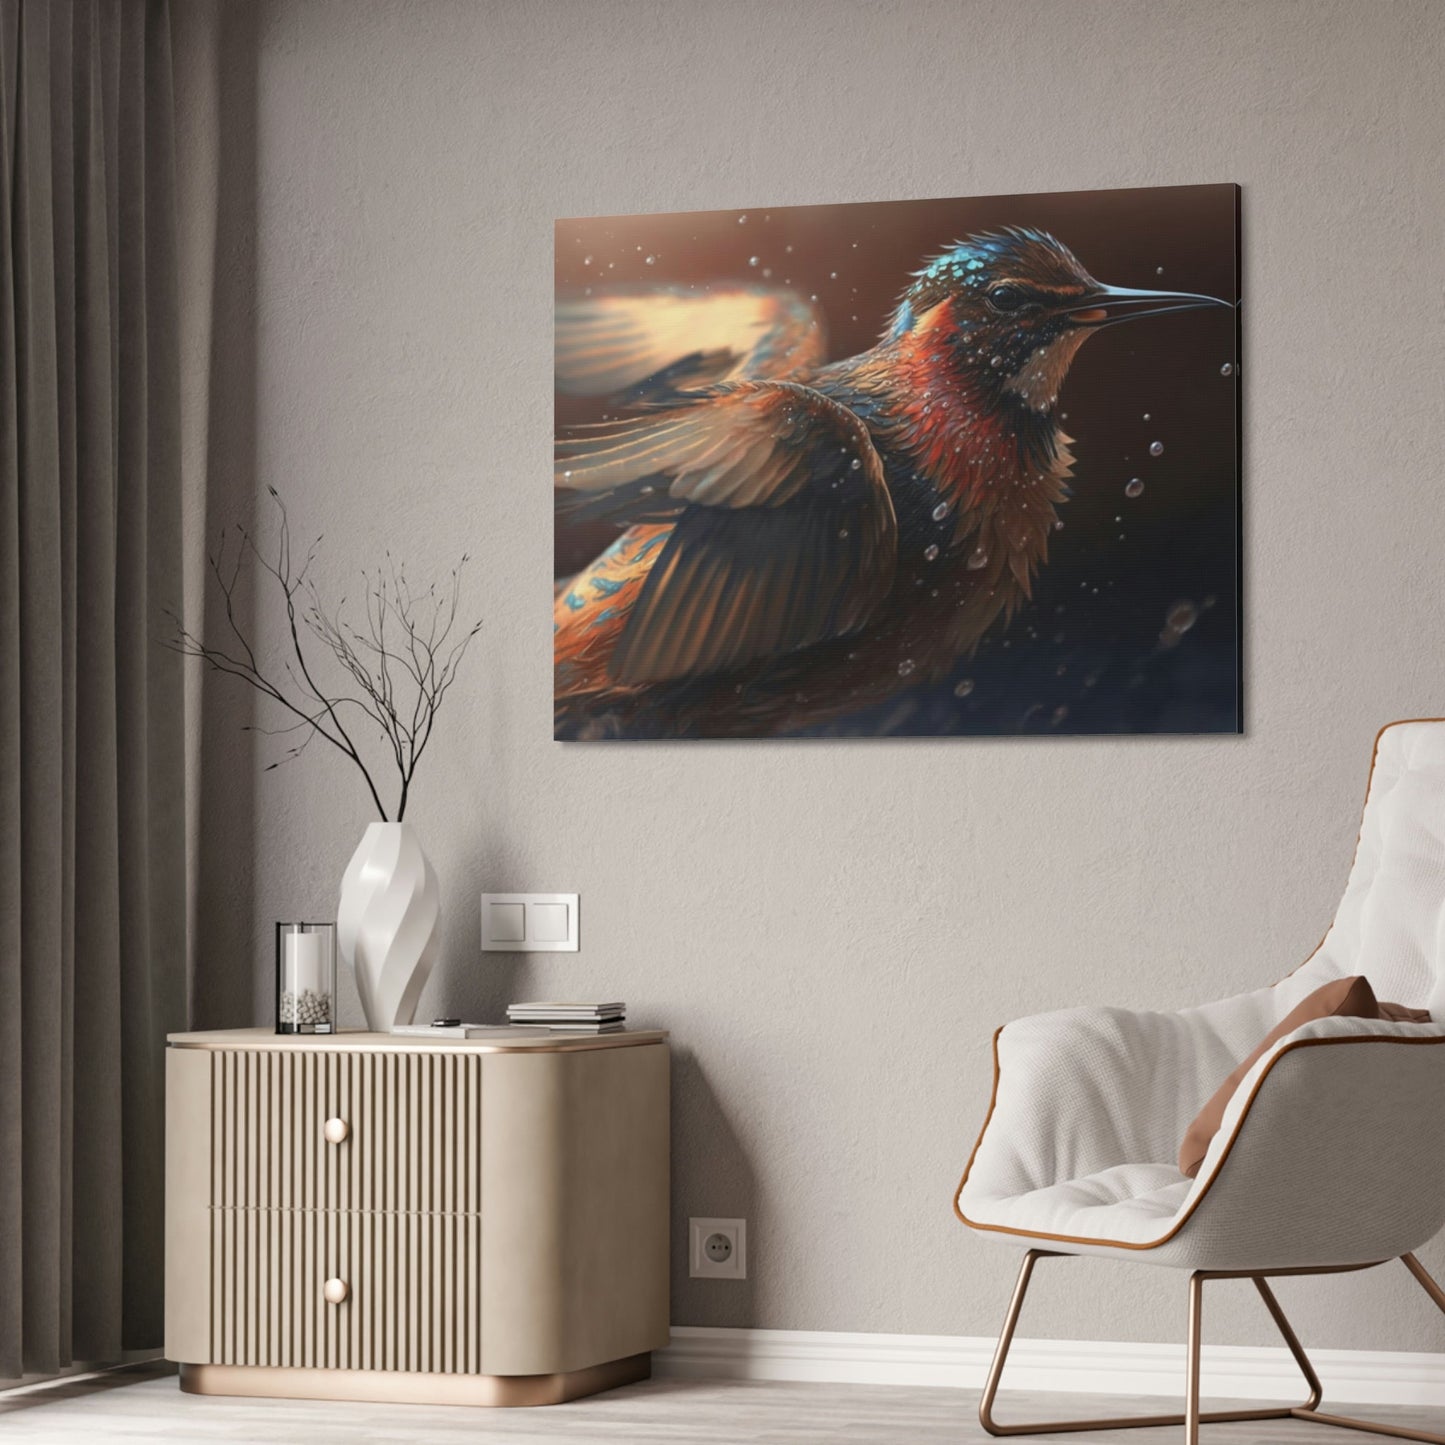 The Flight of Fantasy: A Framed Canvas & Poster Print of Birds